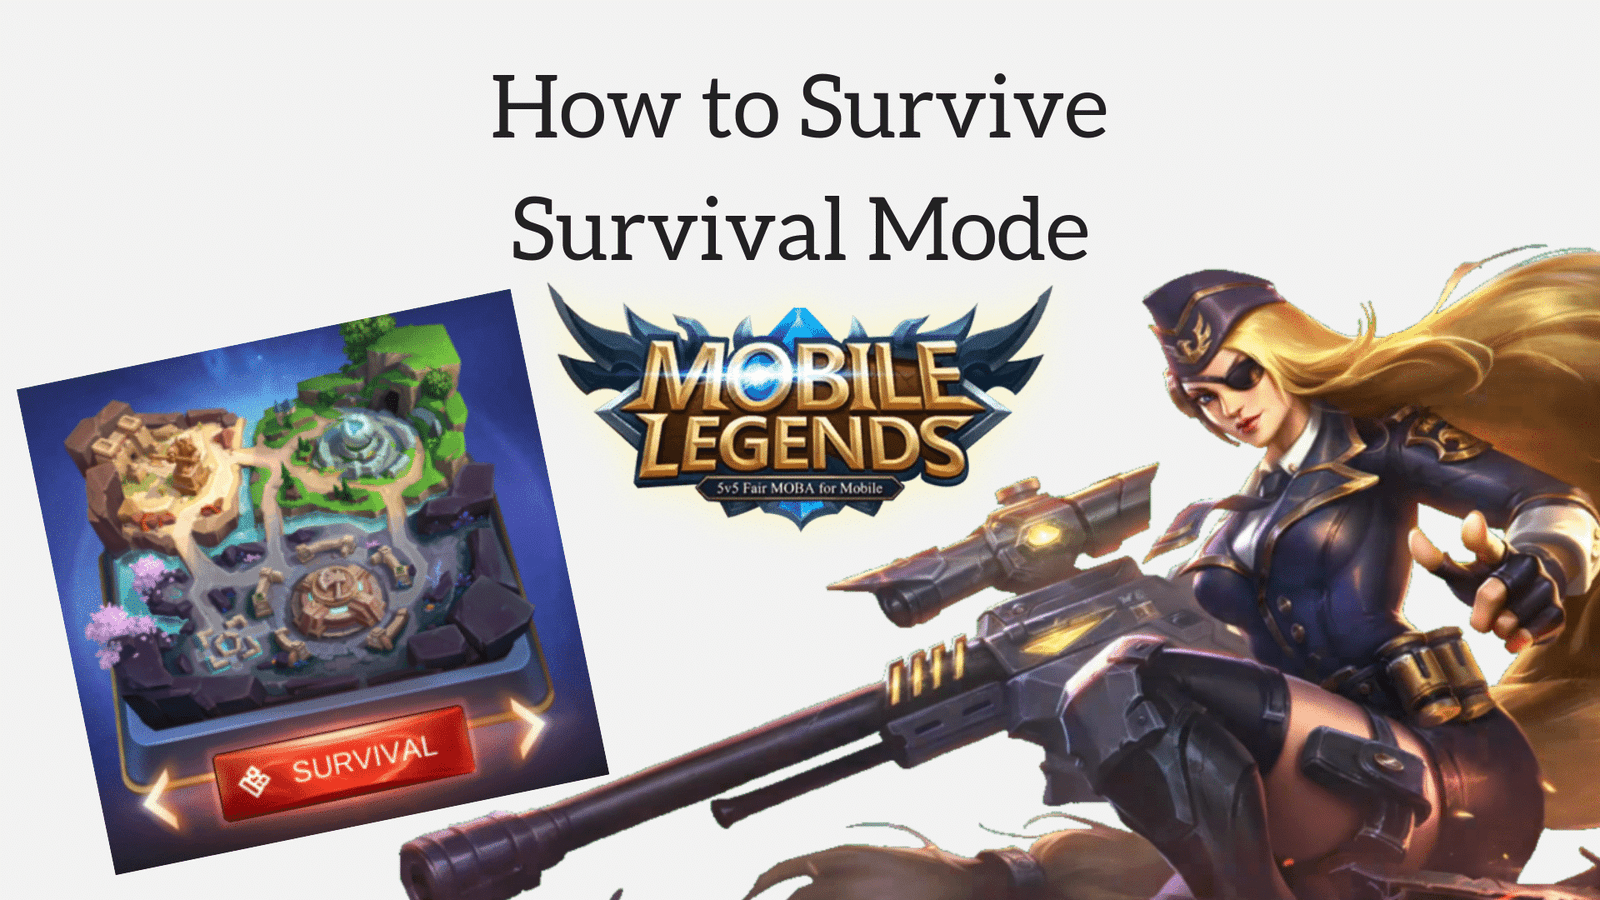 Survival Mode in Mobile Legends